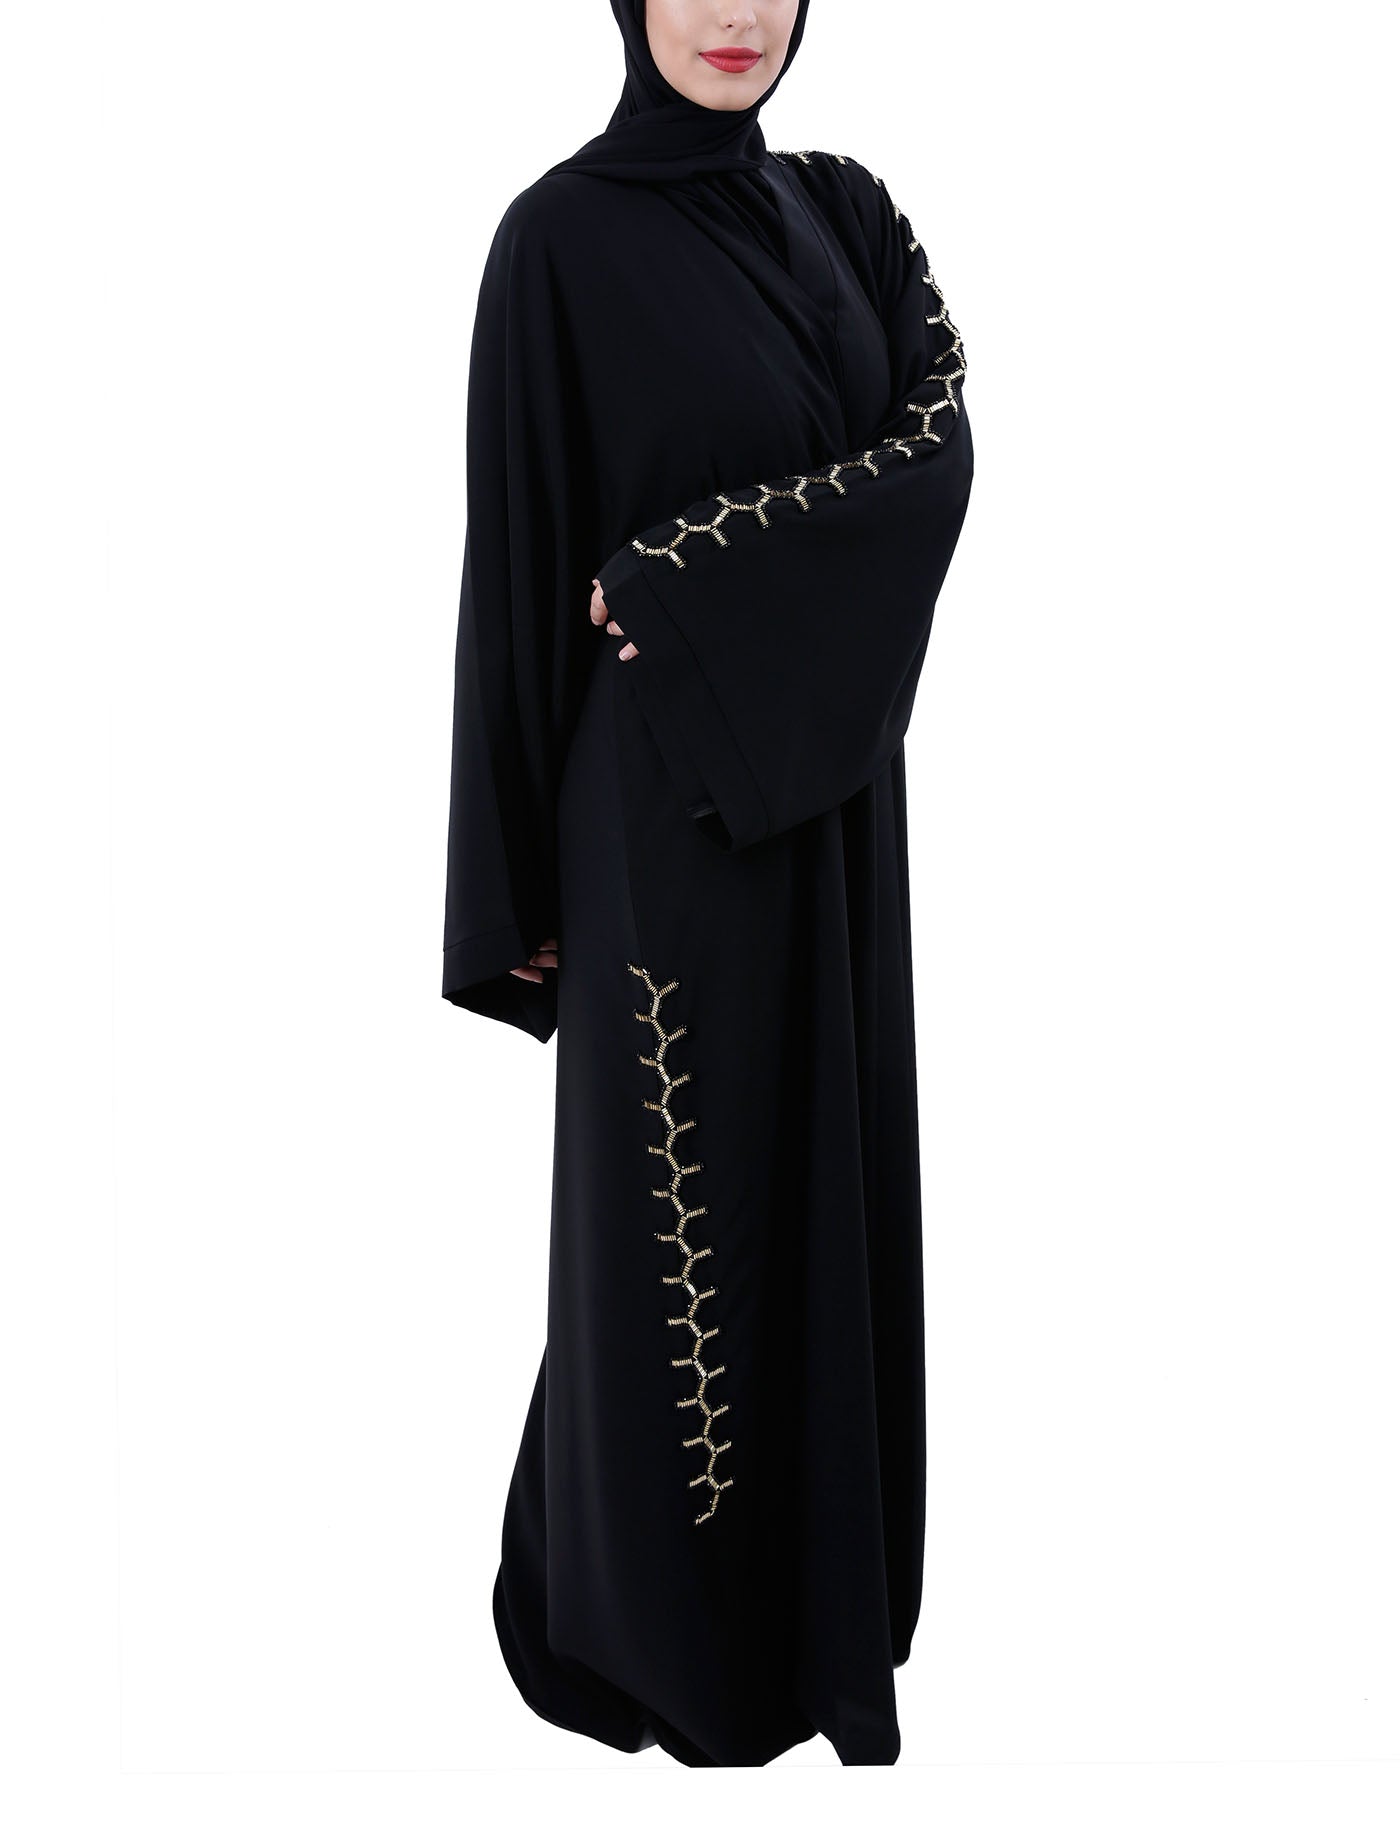 Hanayen Black Abaya With Handmade Work Sleeves